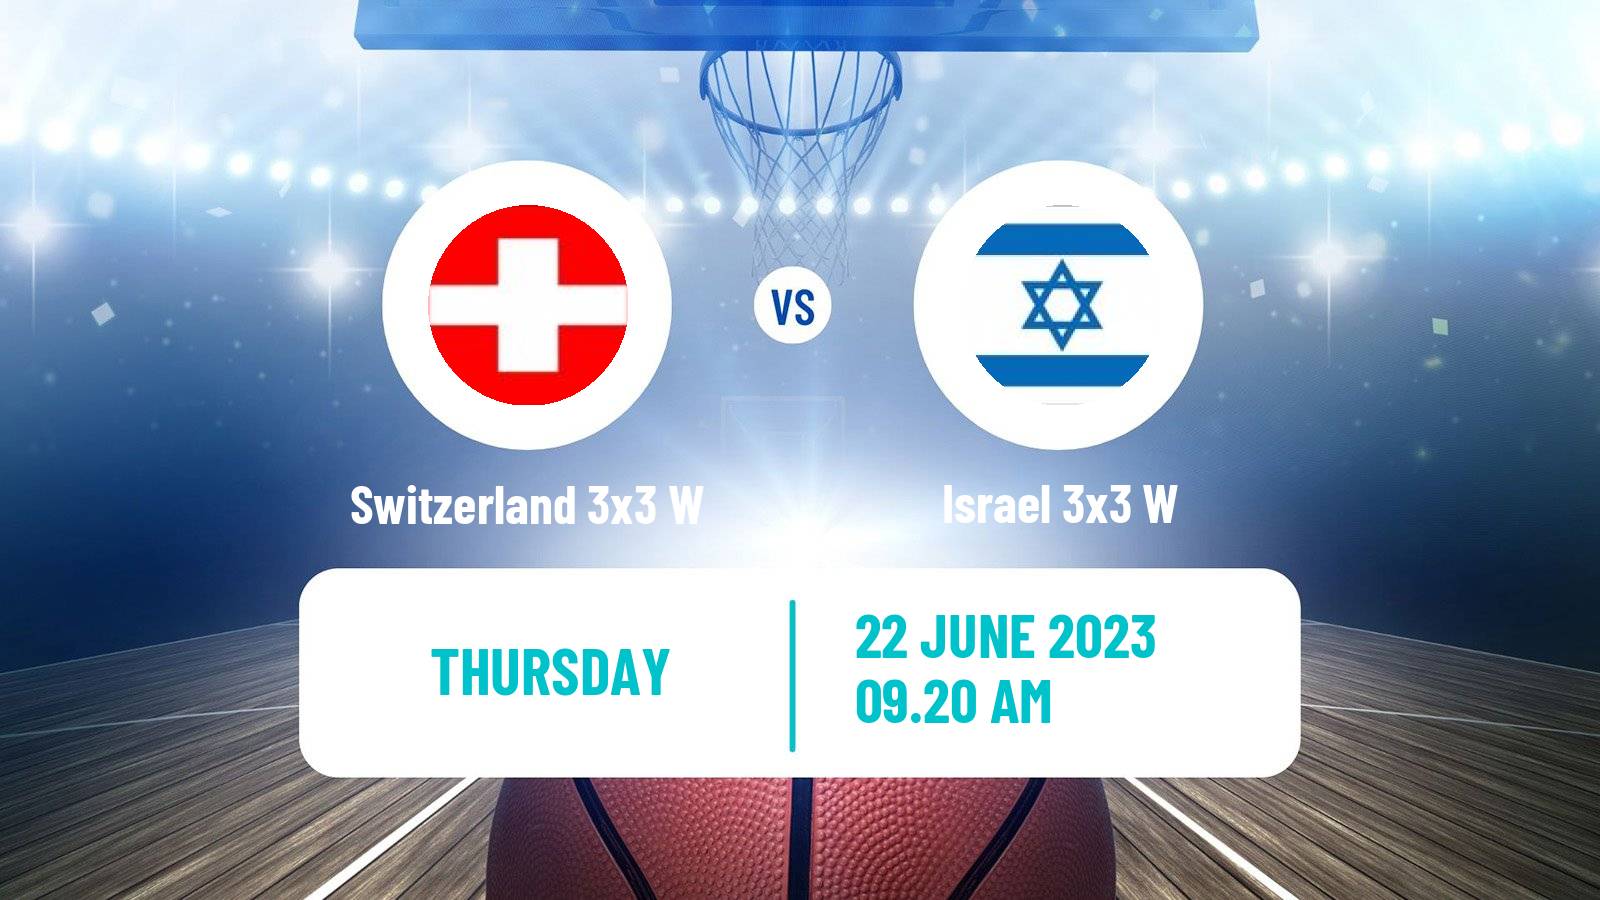 Basketball European Games 3x3 Women Switzerland 3x3 W - Israel 3x3 W